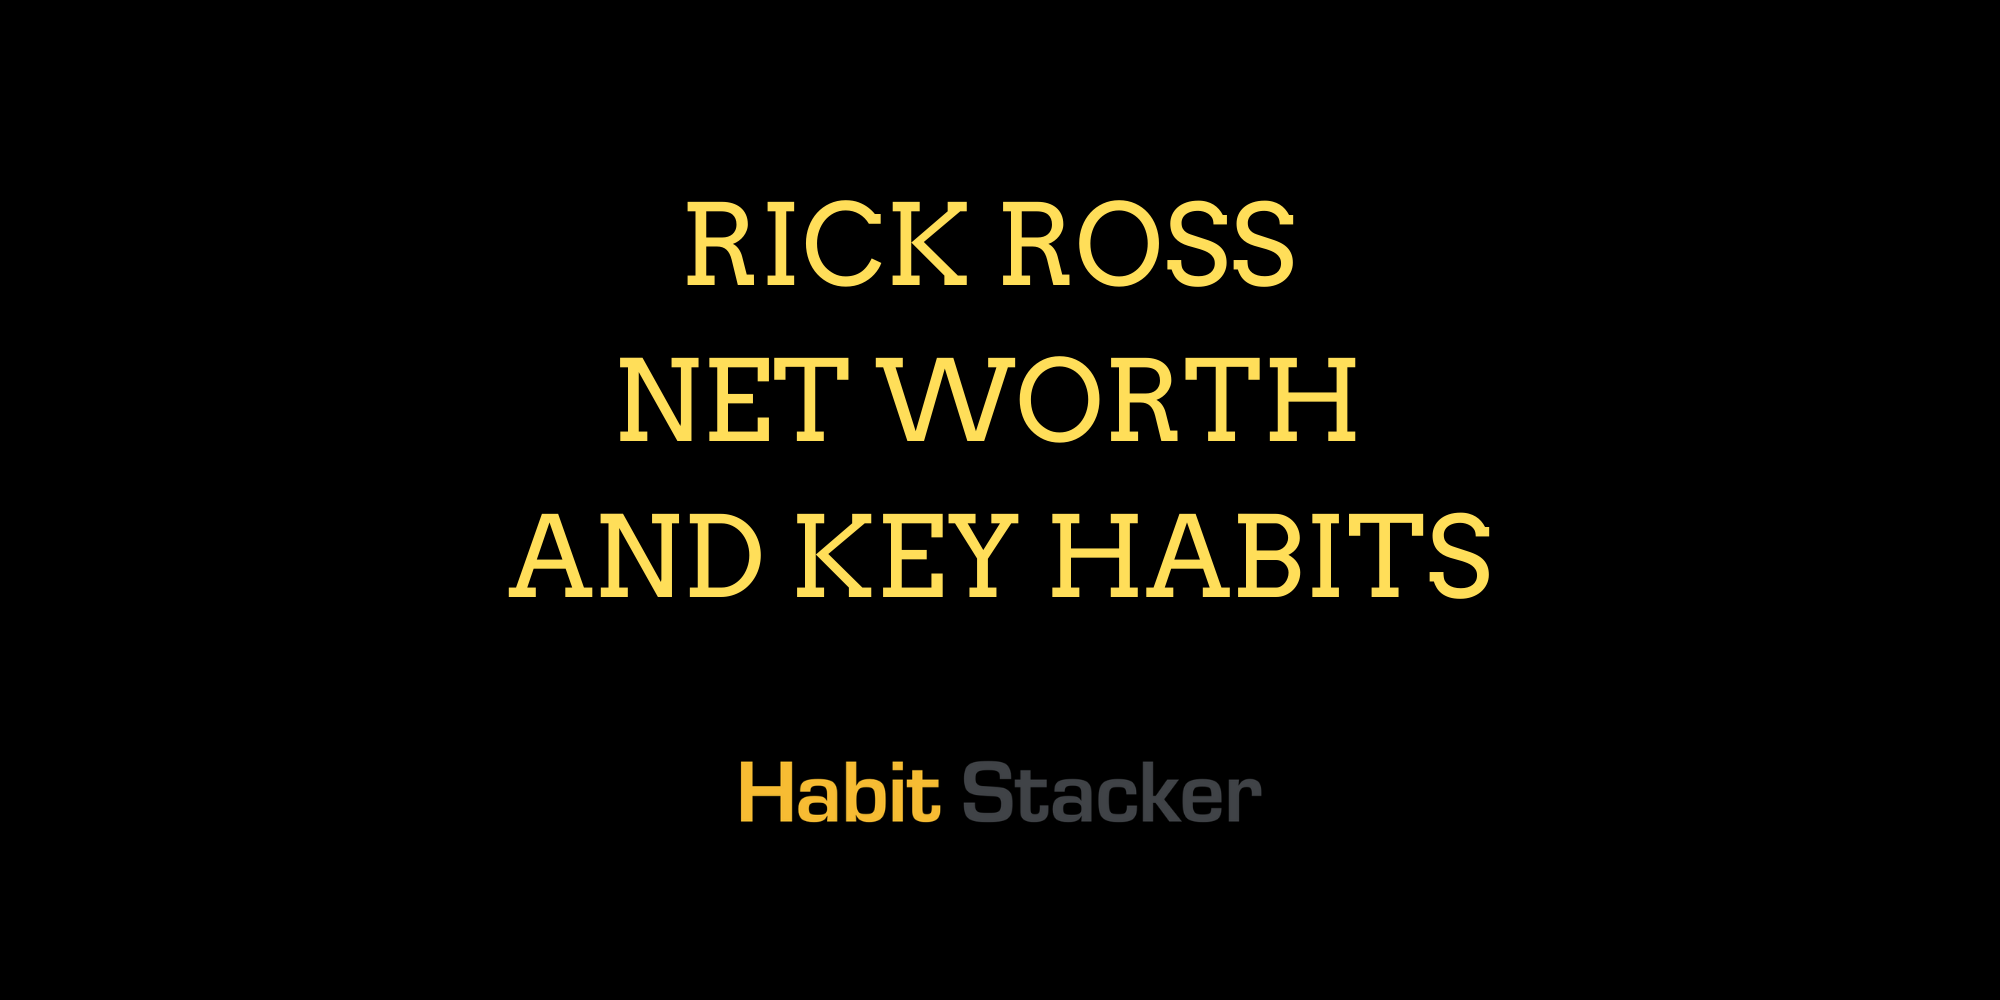 Rick Ross Net Worth and Key Habits